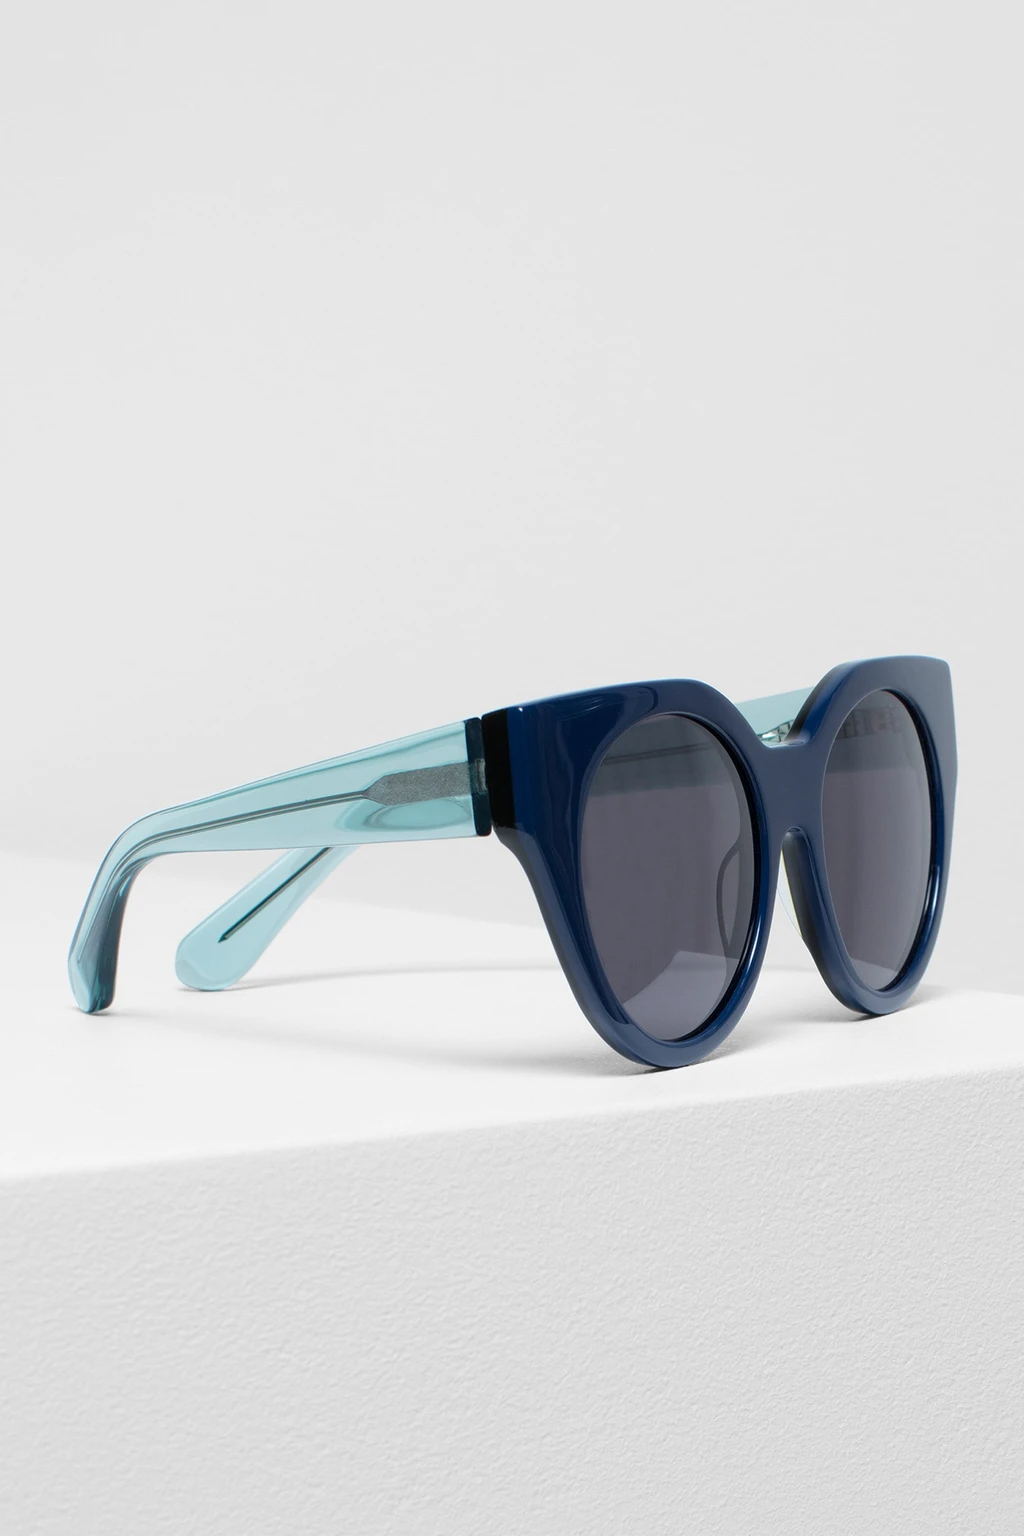 Elk Naema Sunglasses - Navy/Emerald